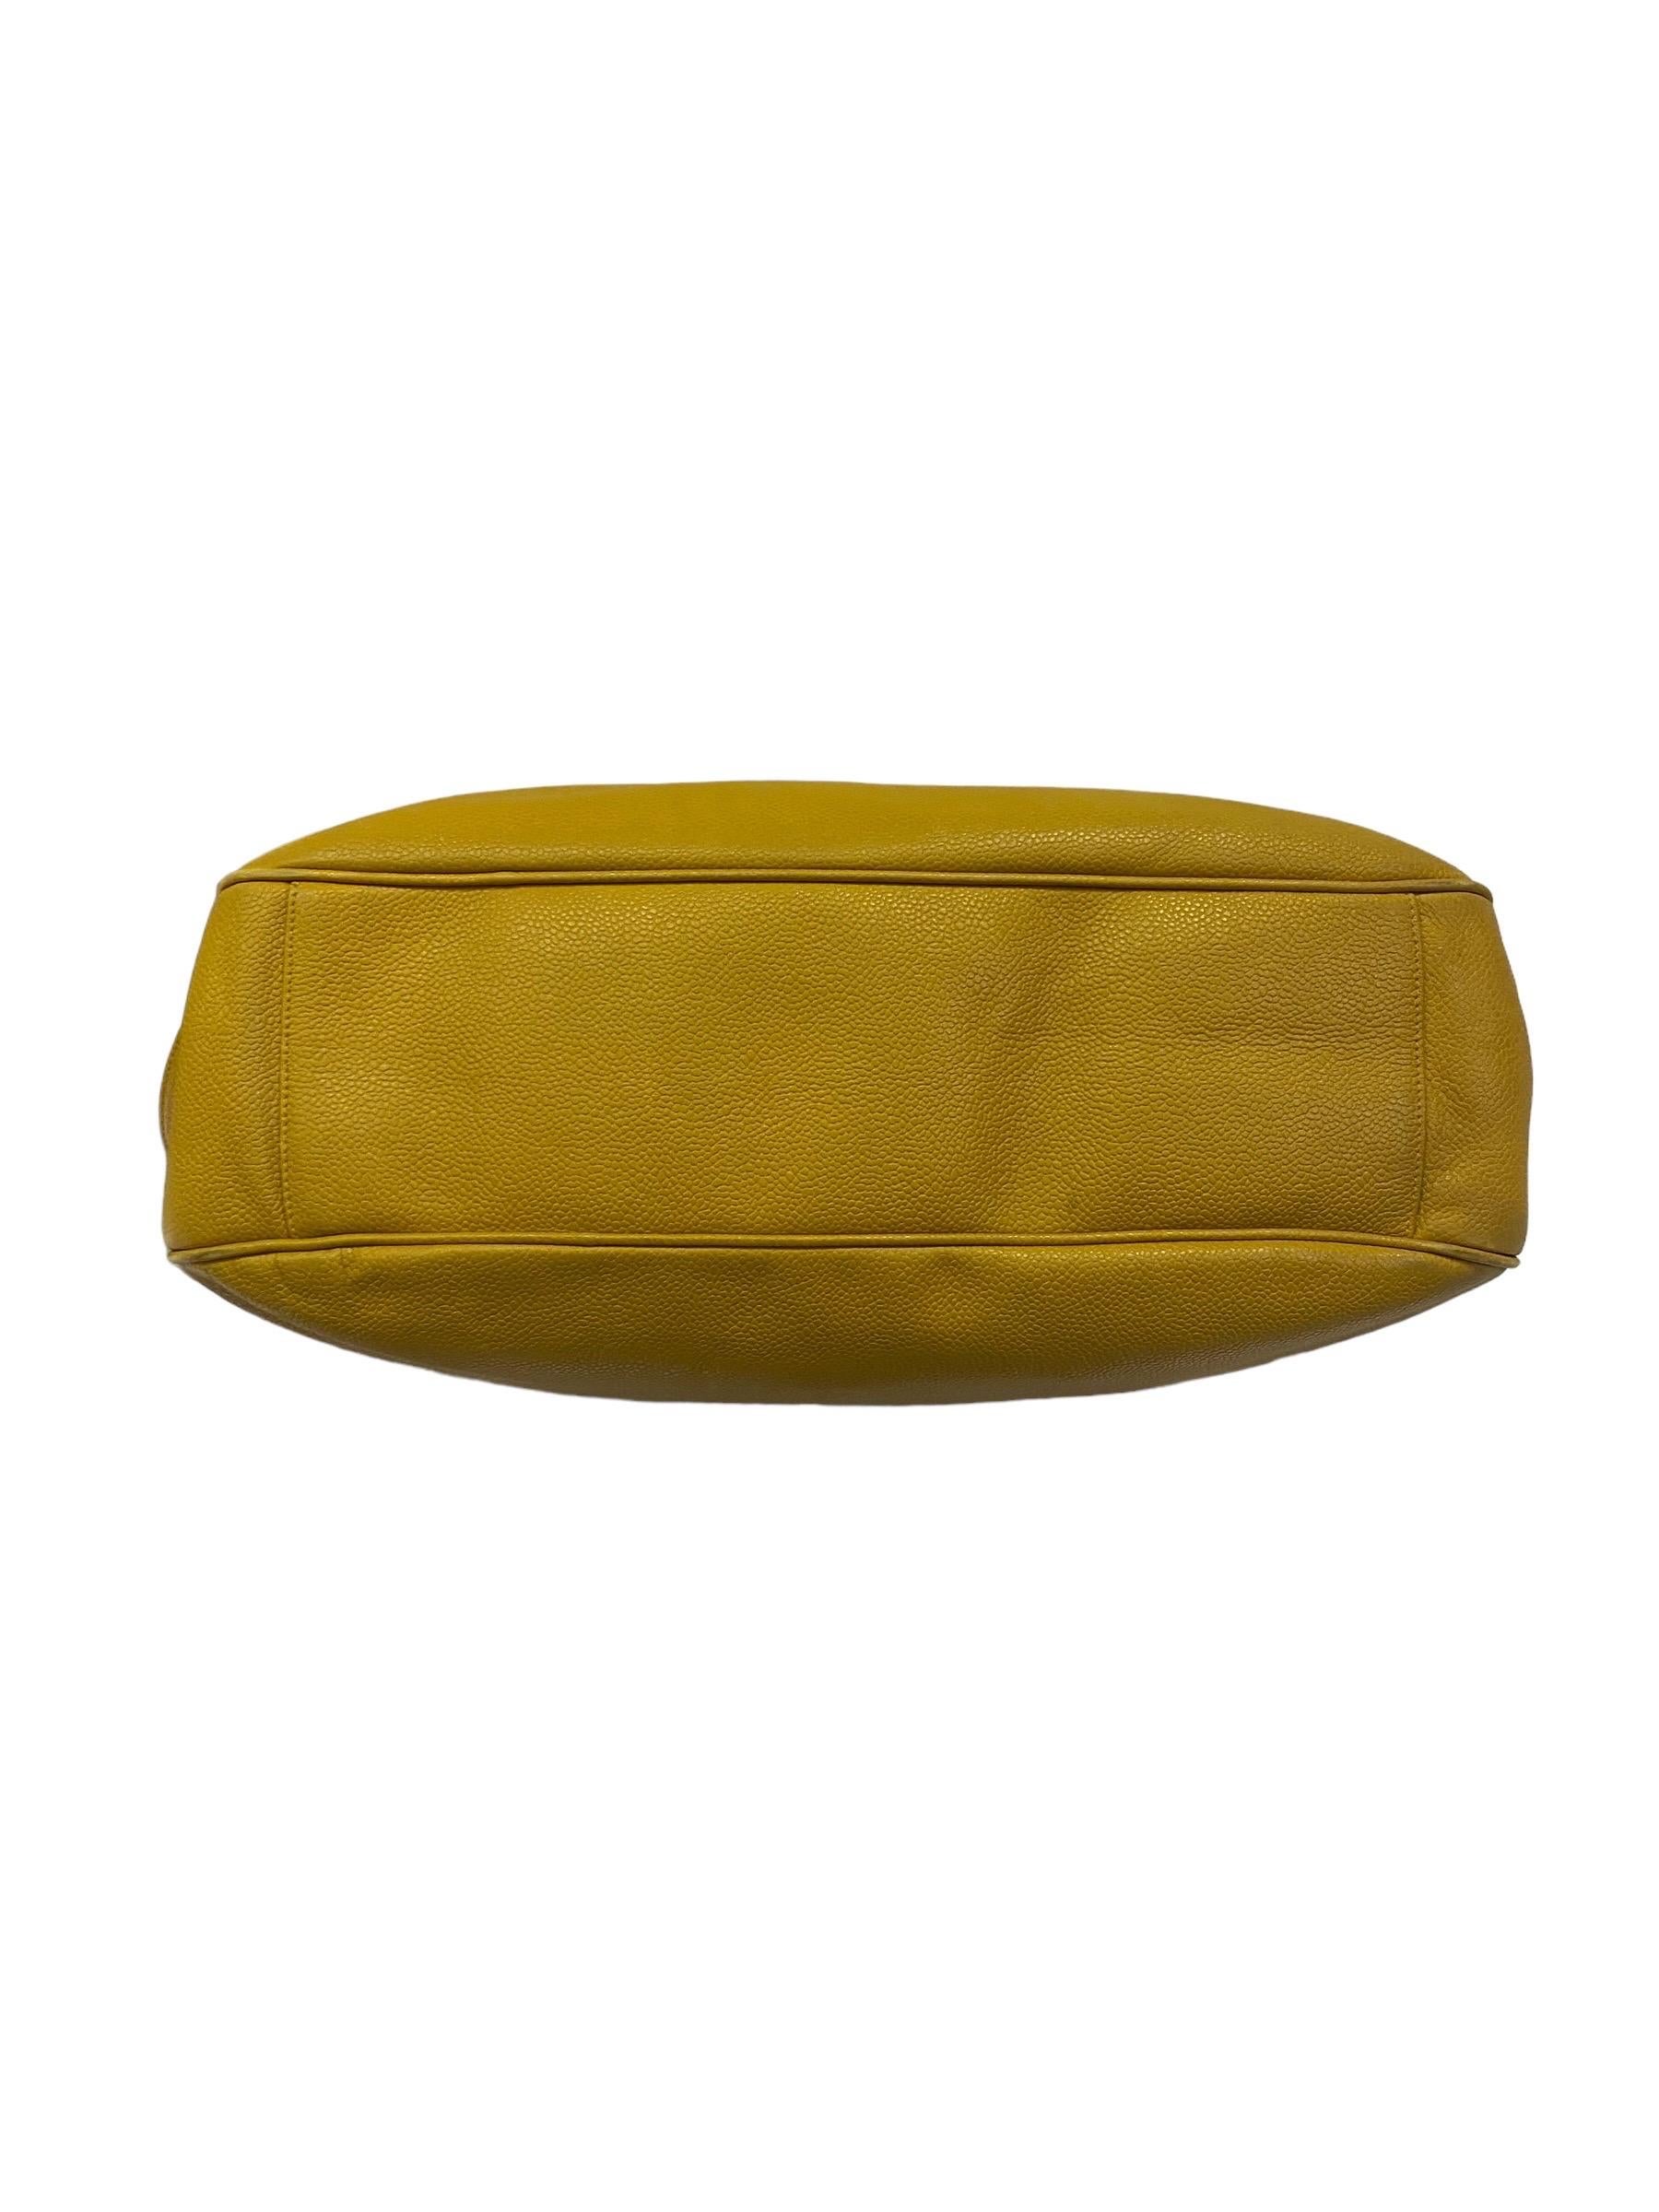 Chanel Yellow Big Tote Shoulder Bag Vintage  2